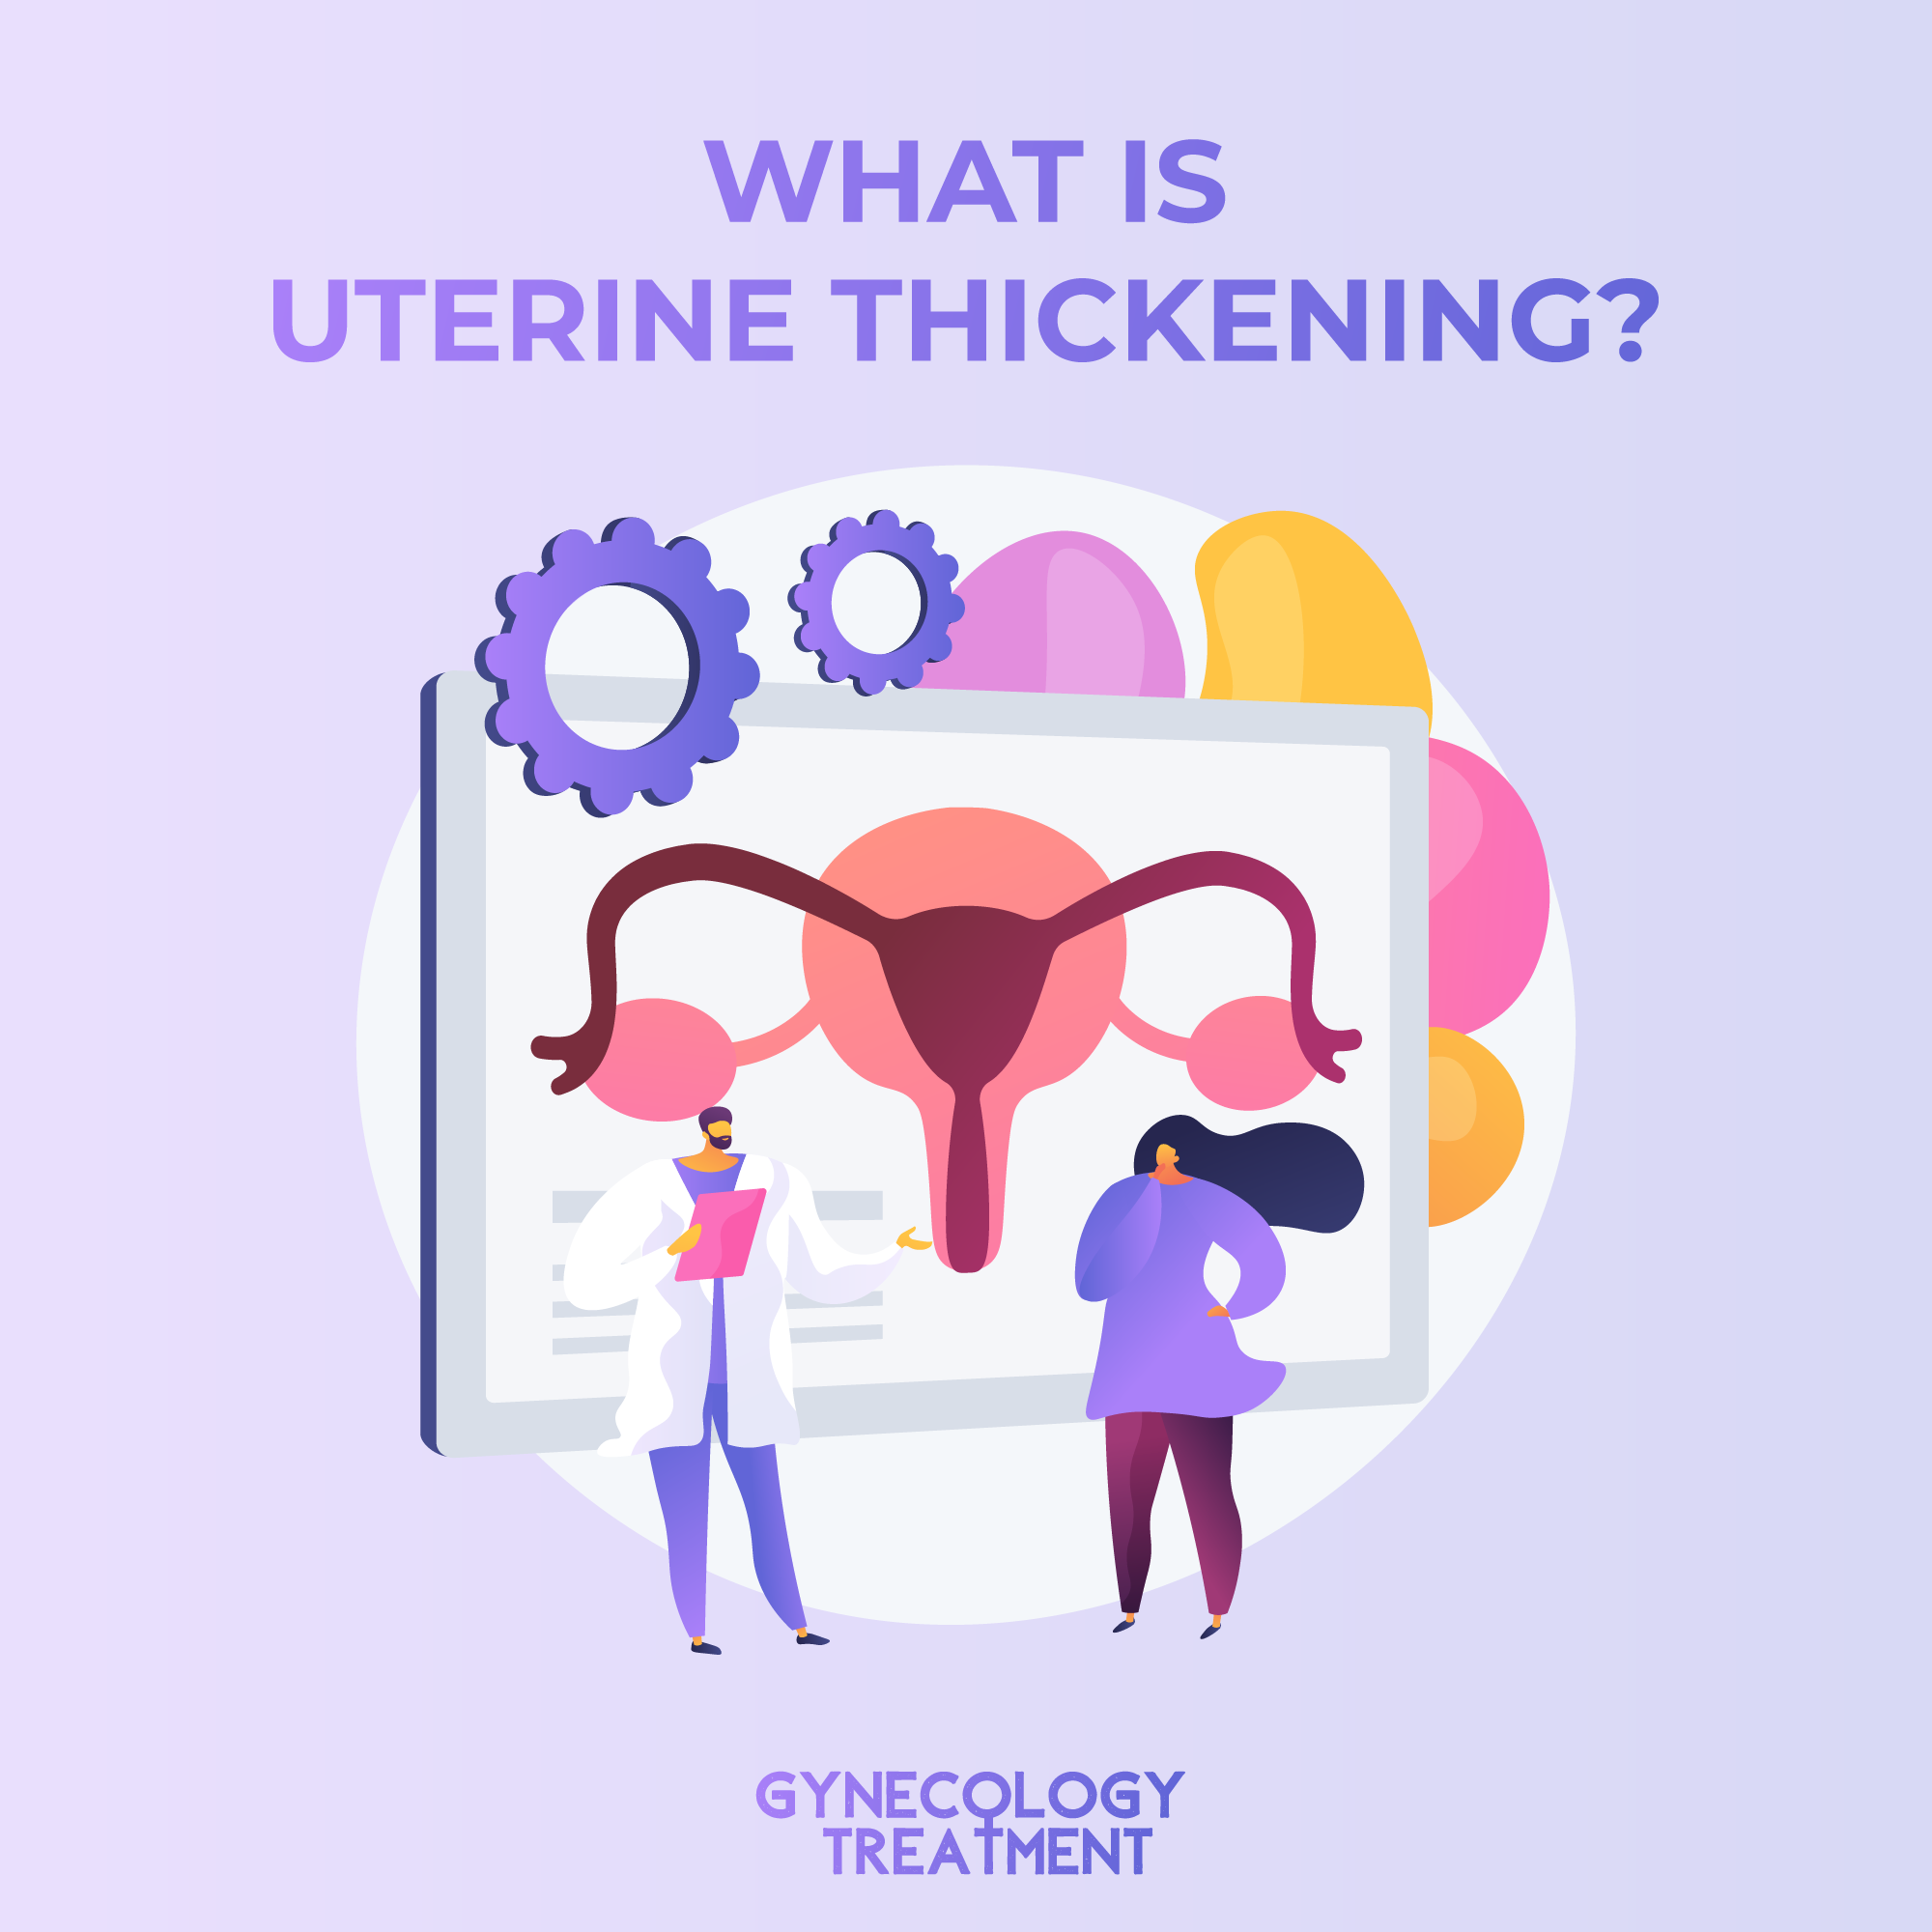 What is uterine thickening (endometrial hyperplasia)?